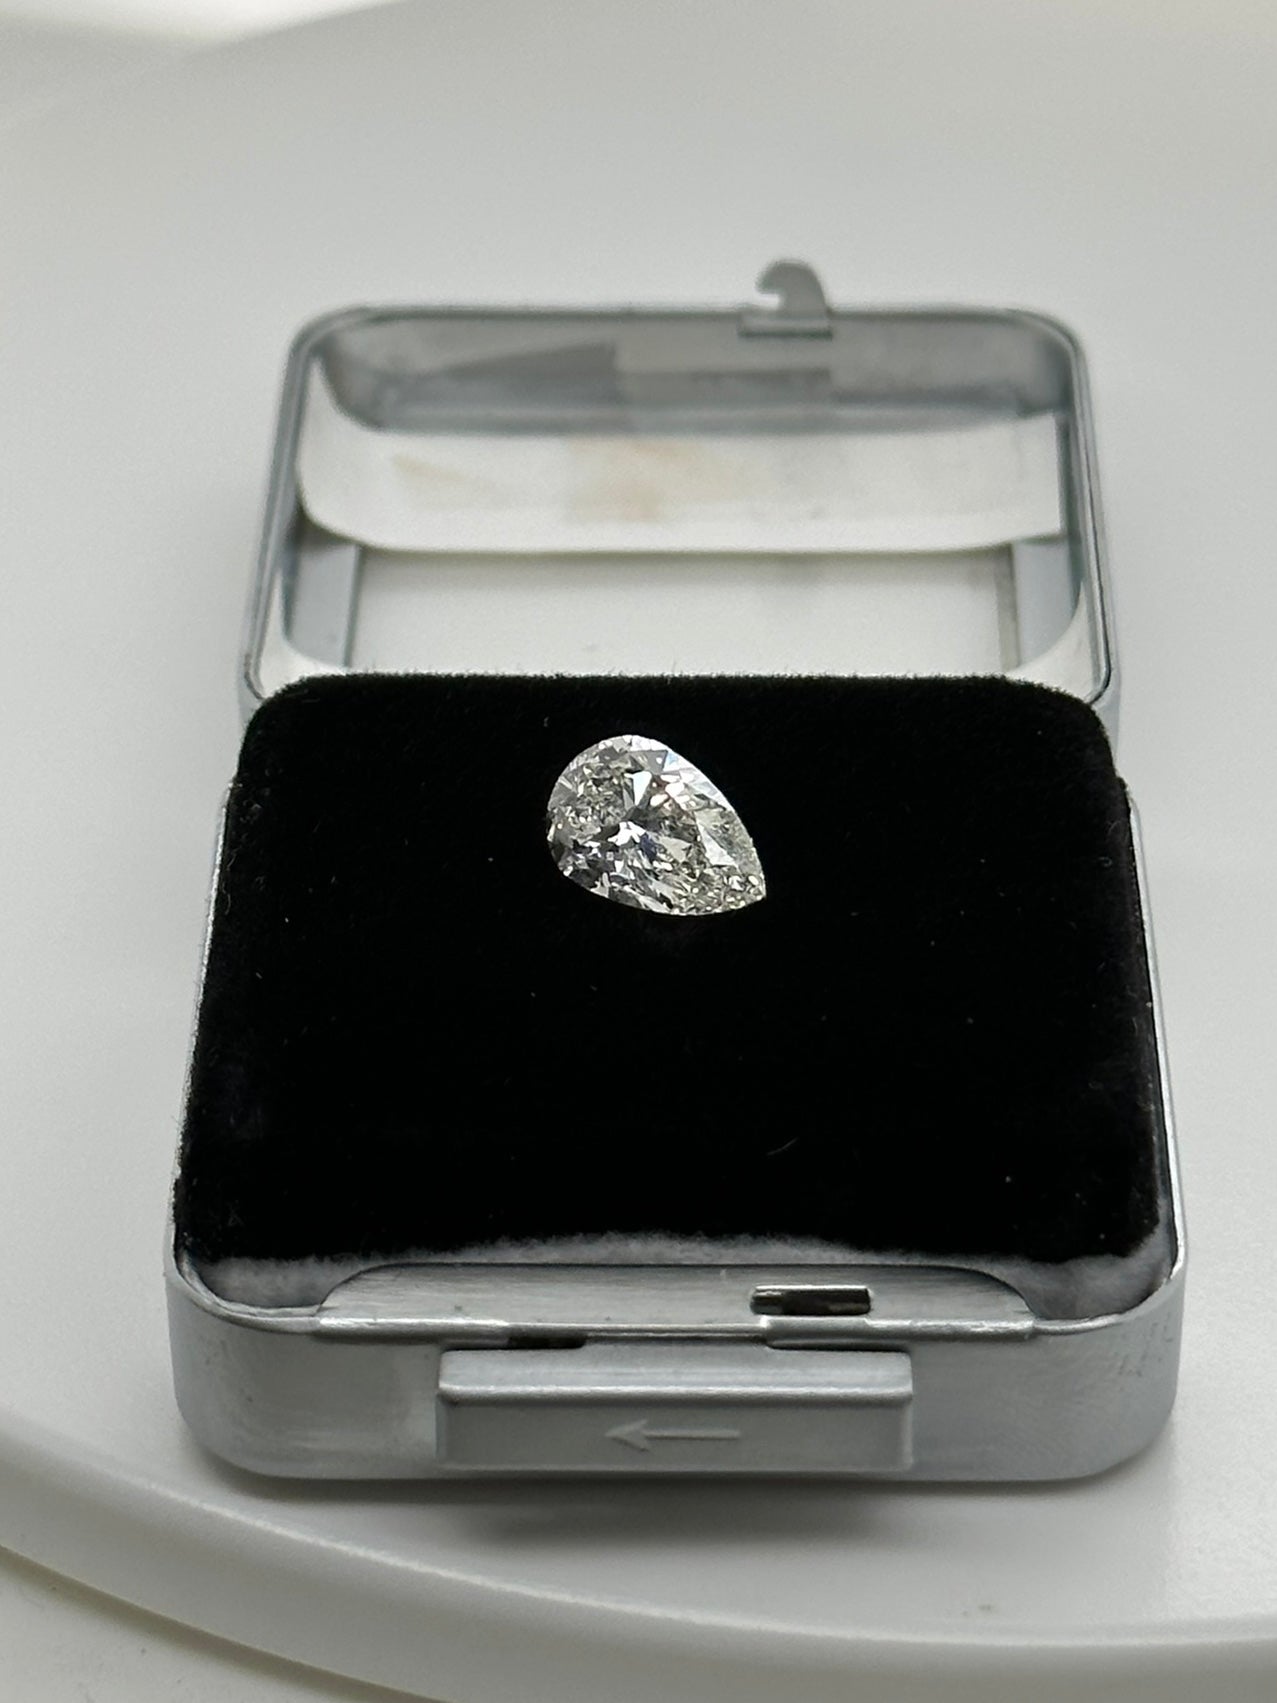 EGL 1.68CT Pear Cut Diamond